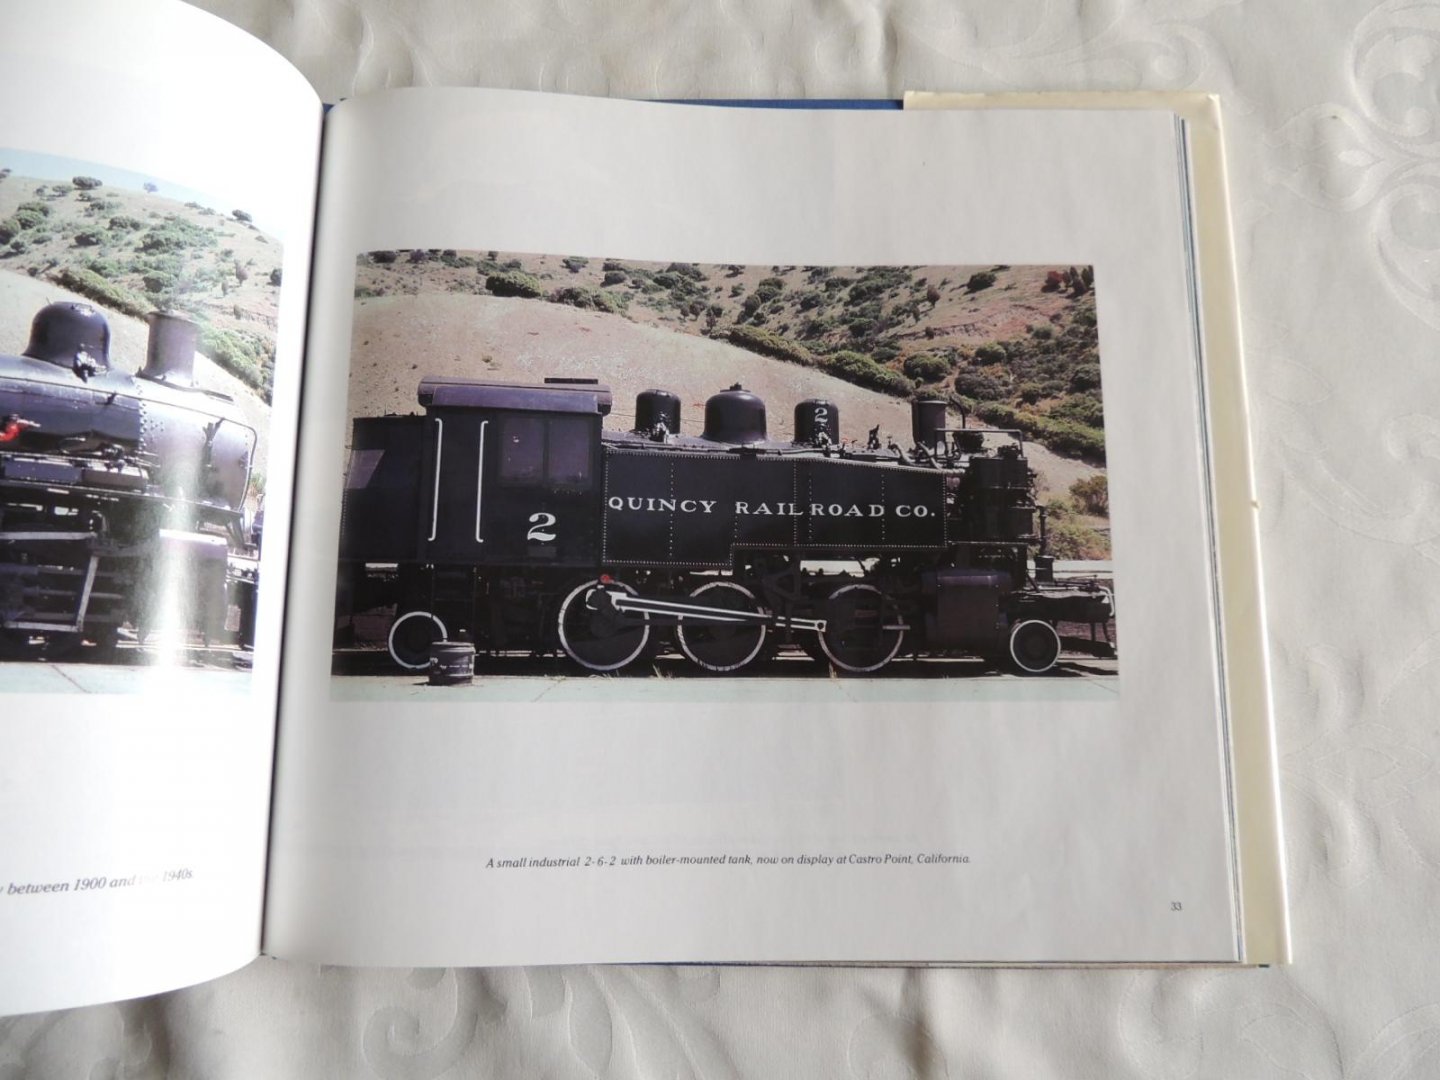 Wickre John M. - Steam trains